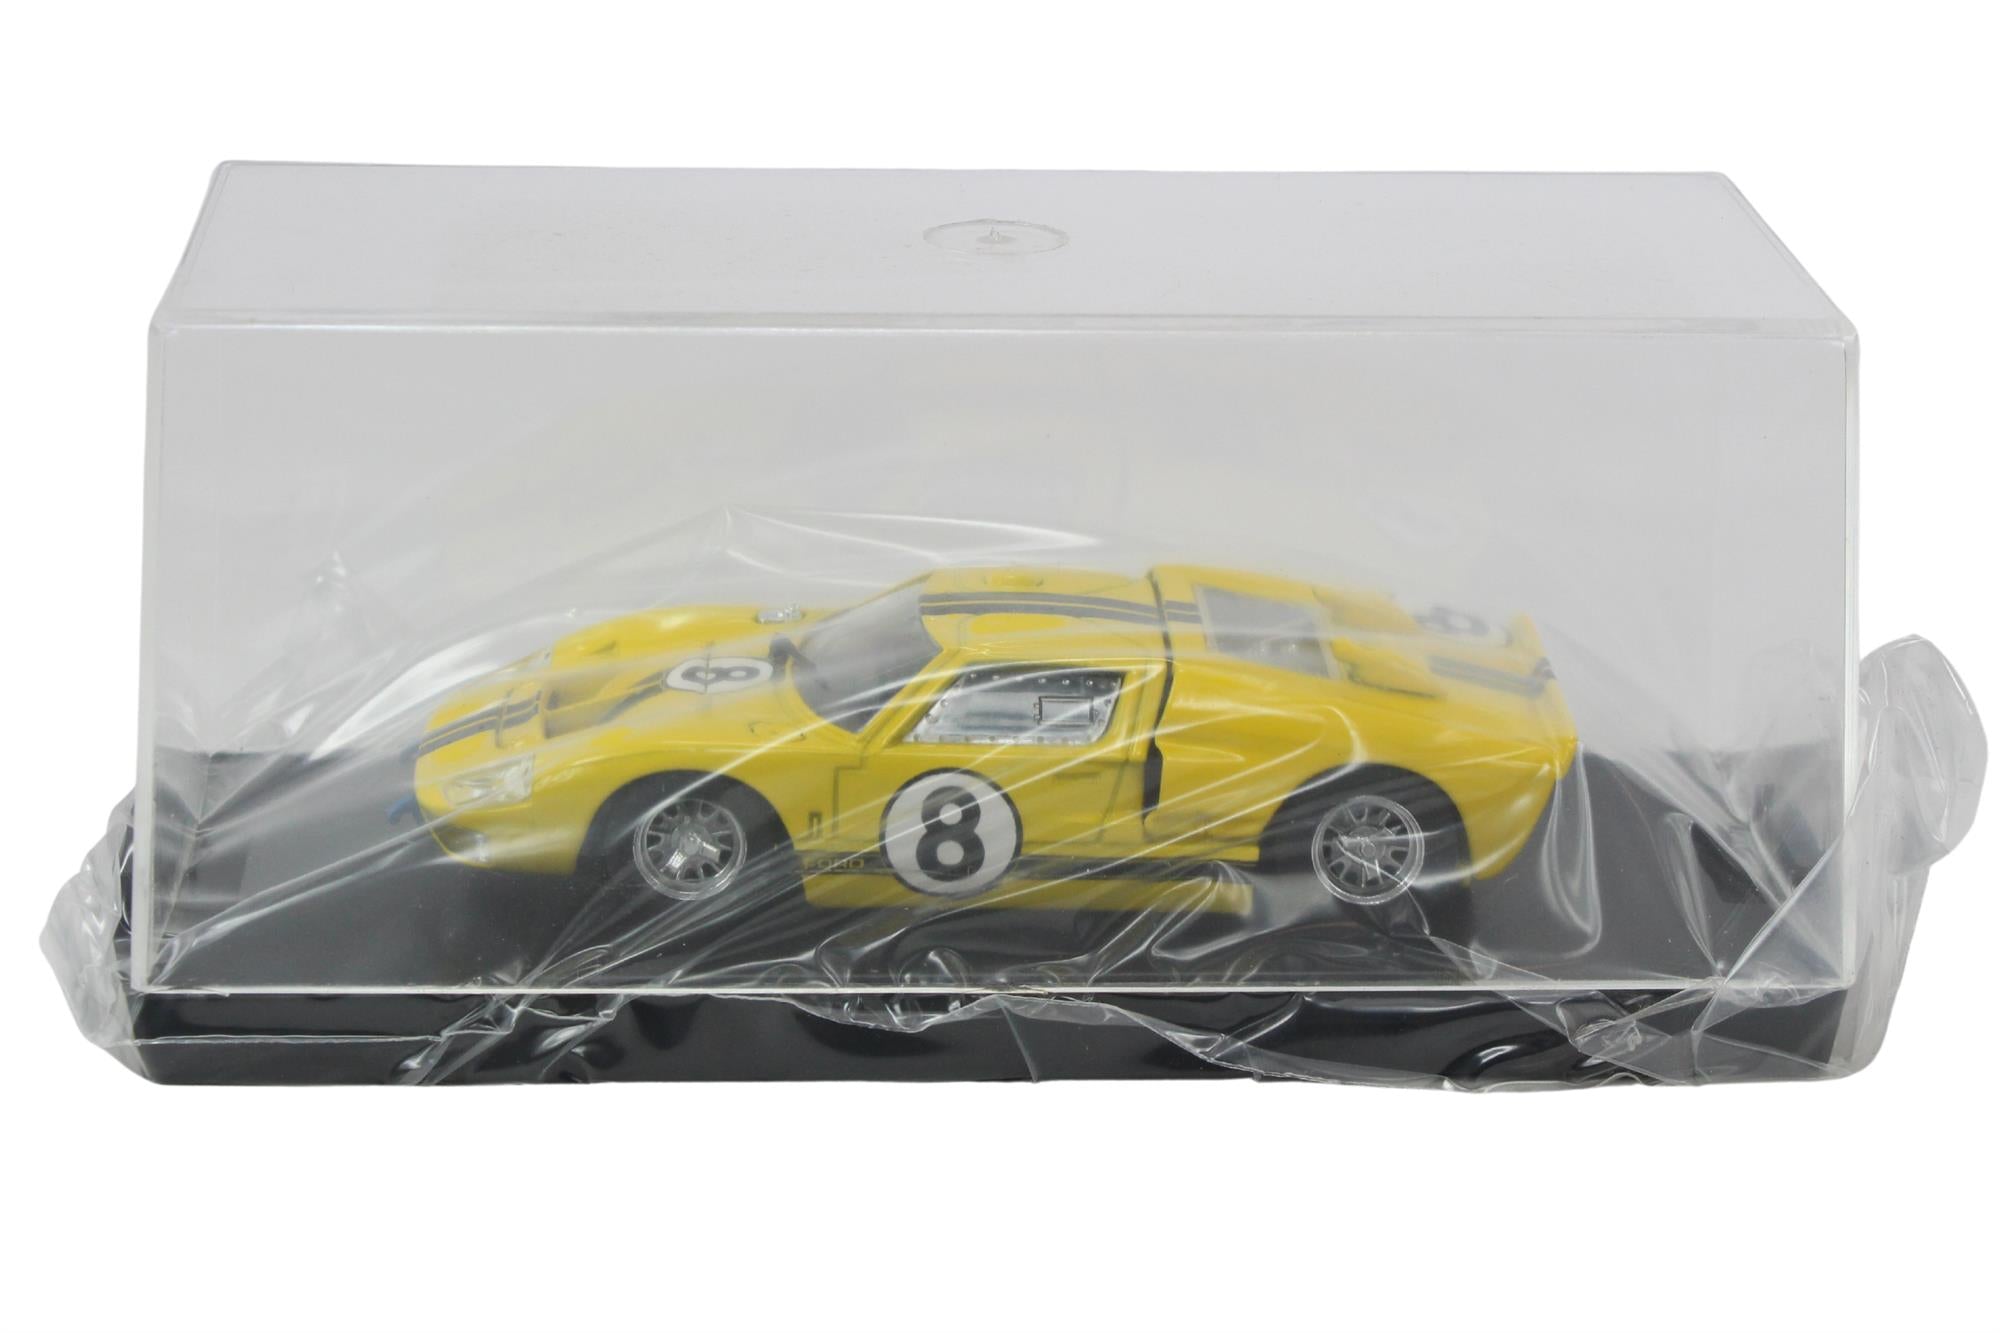 Bang Models - 1:43 Scale Diecast Ford GT40 MK2 "Le Mans 1966" #8 Whitmore & Gardner Racing Car - Original Factory Sealed Never Opened - Toptoys2u